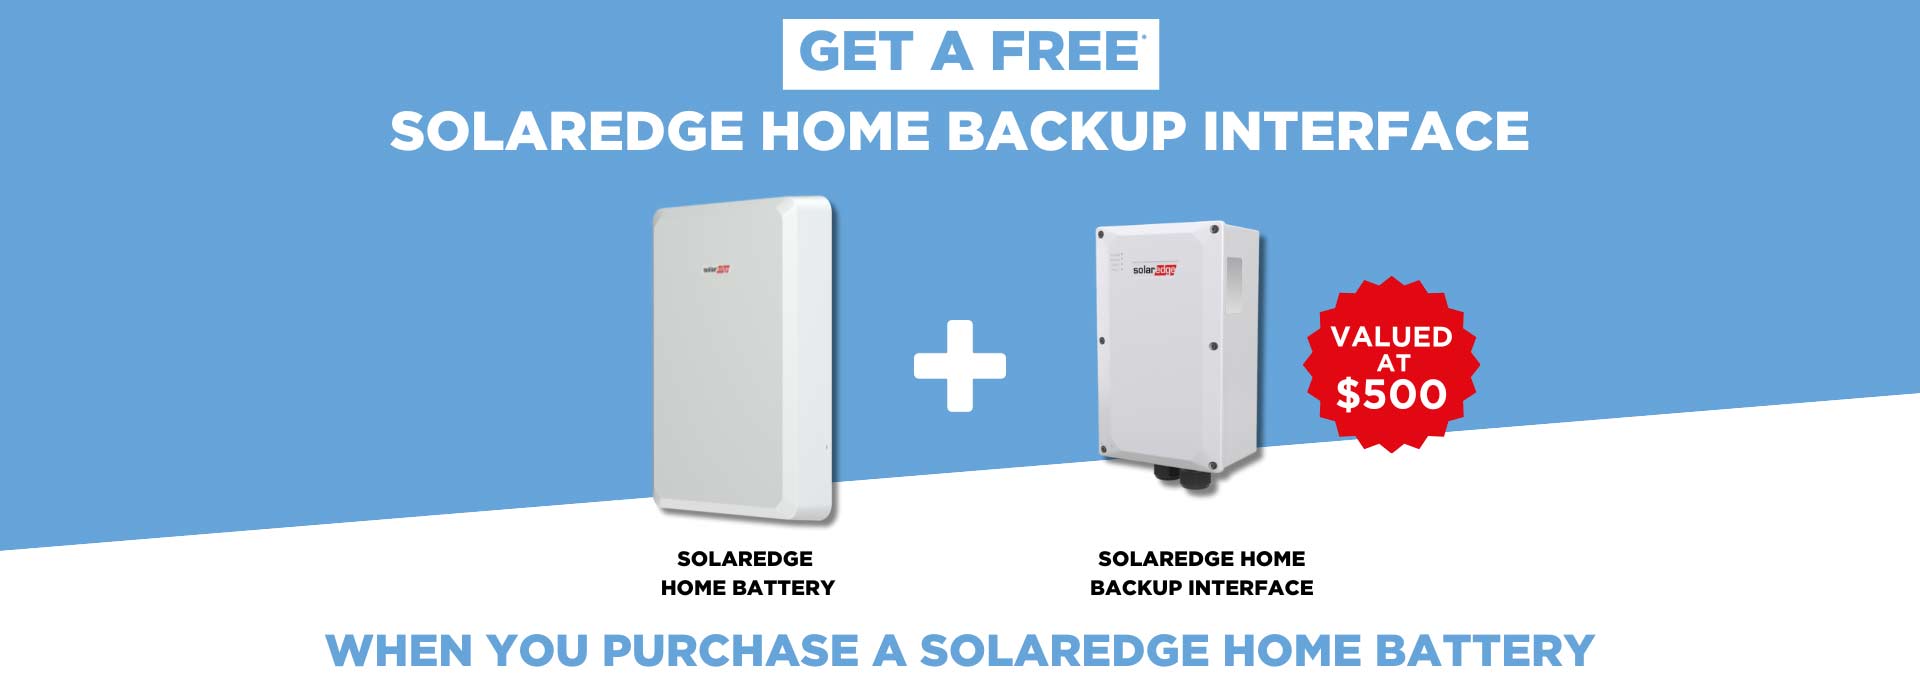 Free SolarEdge Home Backup Interface